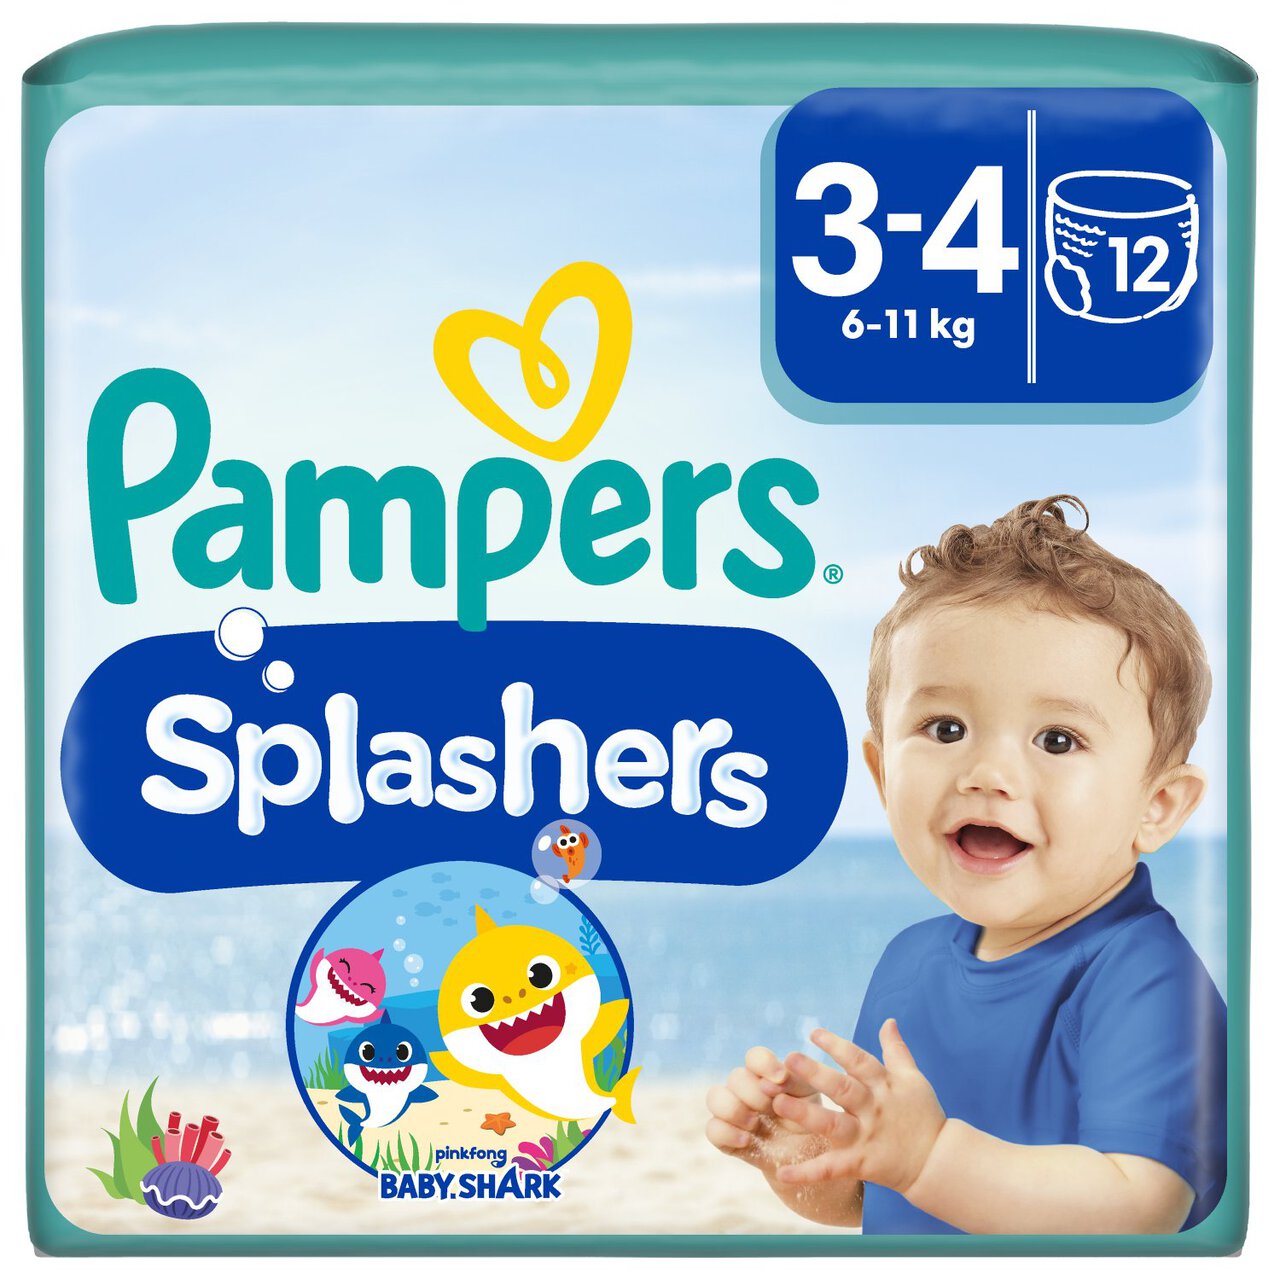 pampers splashers 3 4